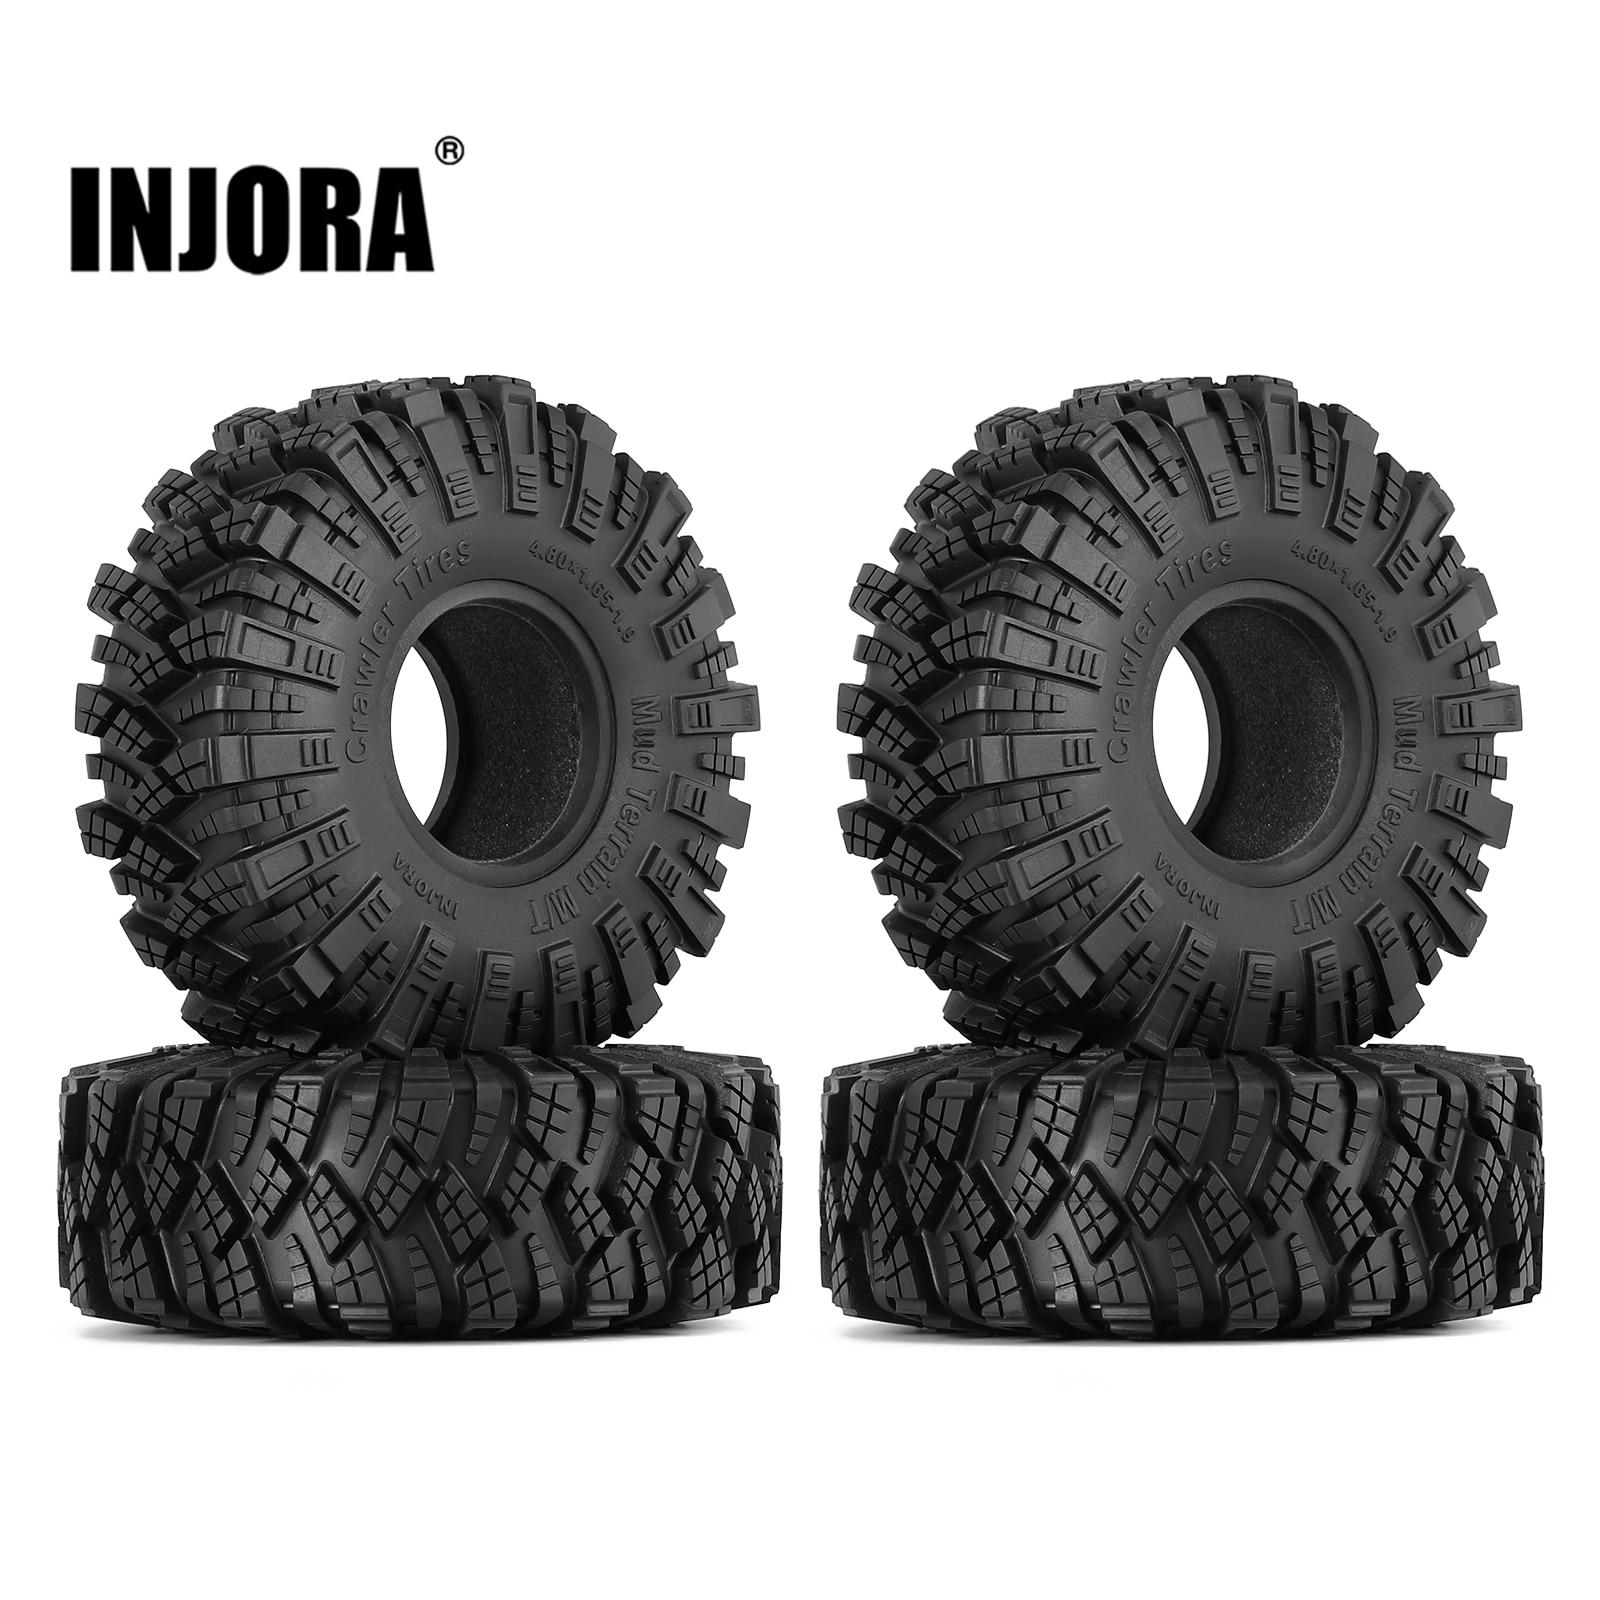 INJORA-122-42MM-Mud-Terrain-1-9-Wheel-Tires-for-1-10-RC-Crawler-Car-Axial.jpg